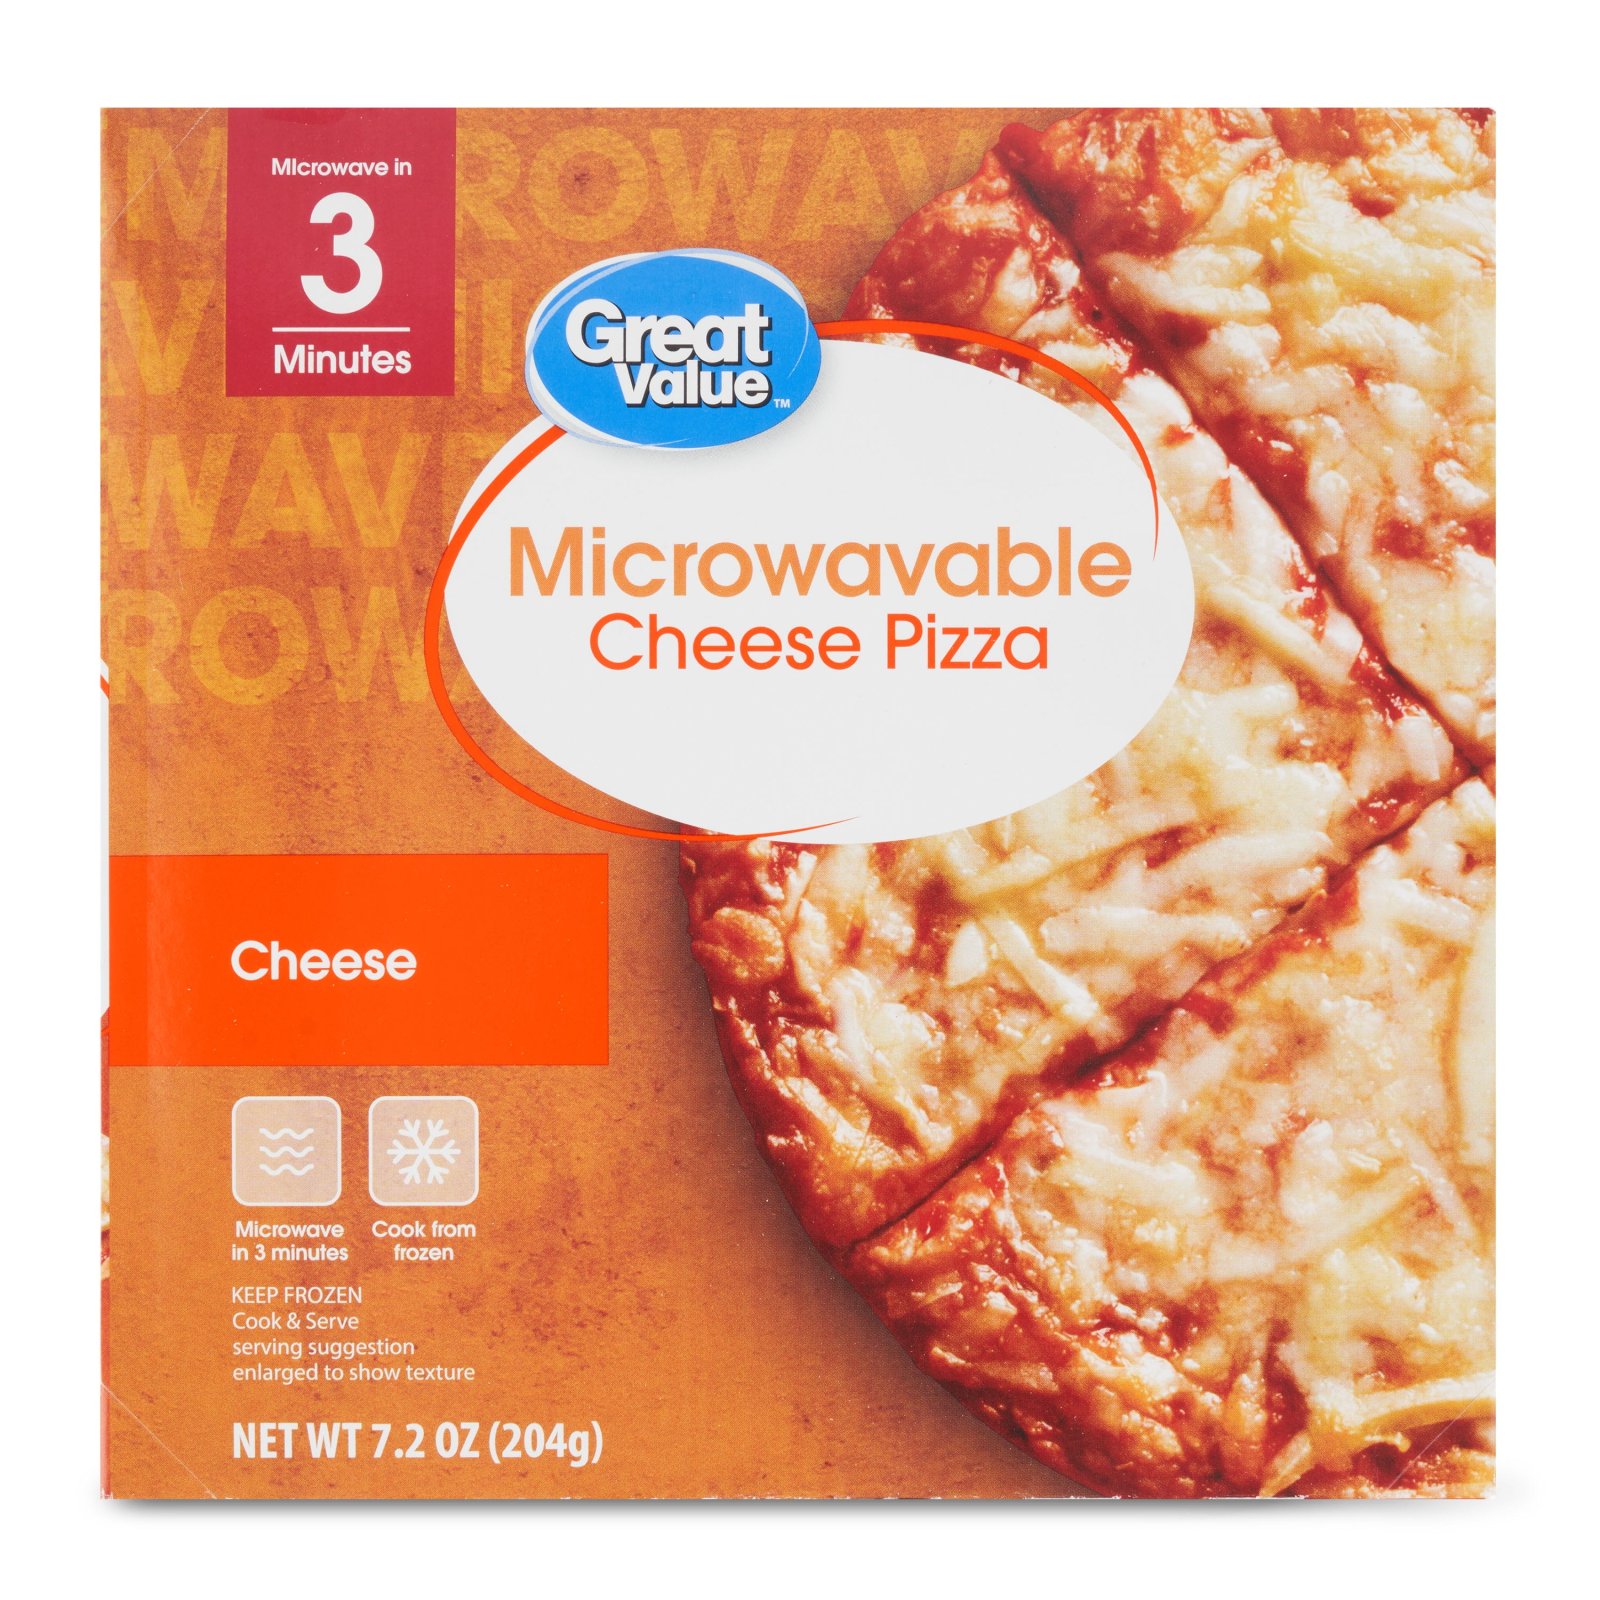 Great-Value-Classic-Crust-Cheese-Microwave-Frozen-Pizza-7-2oz_16d652e7-e6d6-4067-b3ba-3f0d4f5...jpeg